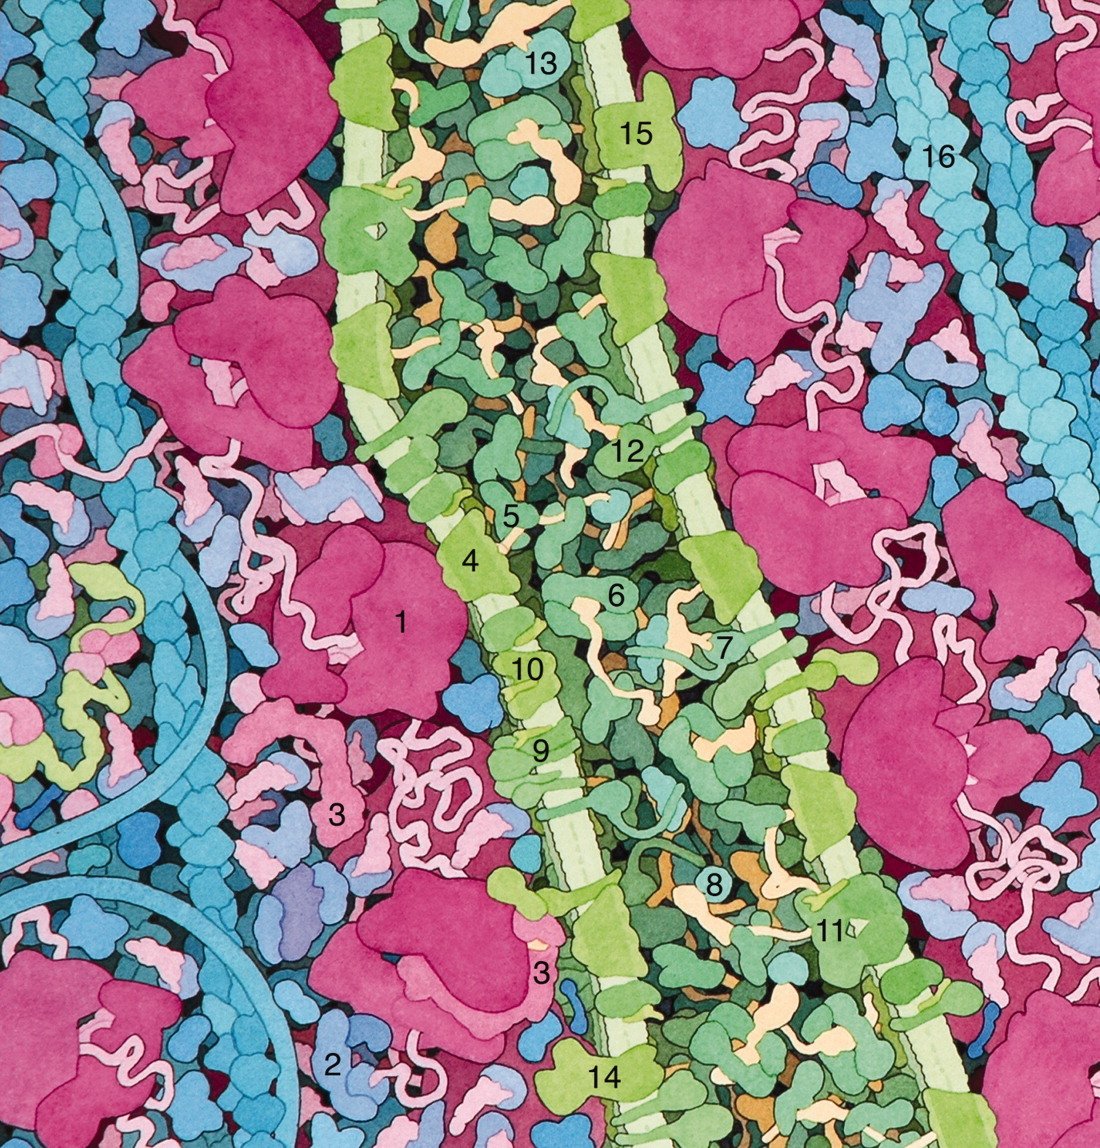 Réticulum endoplasmique, illustration de David S. Goodsell